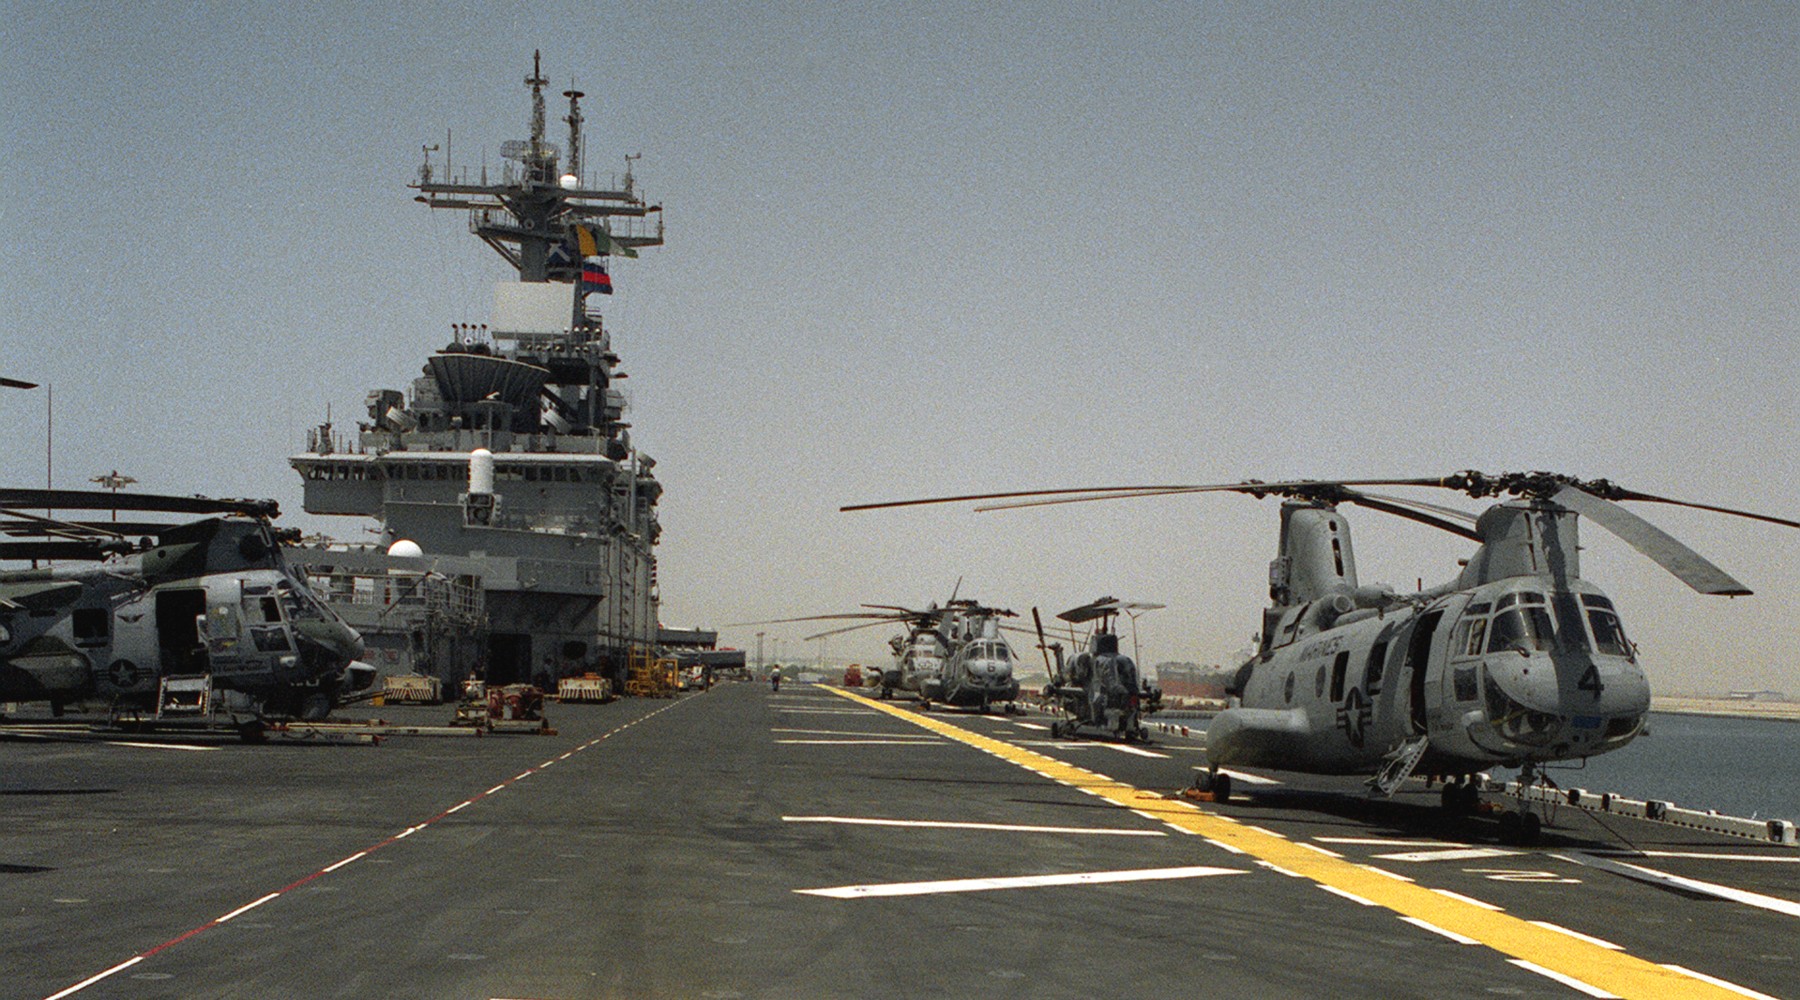 lhd-1 uss wasp amphibious assault landing ship dock helicopter us navy 93